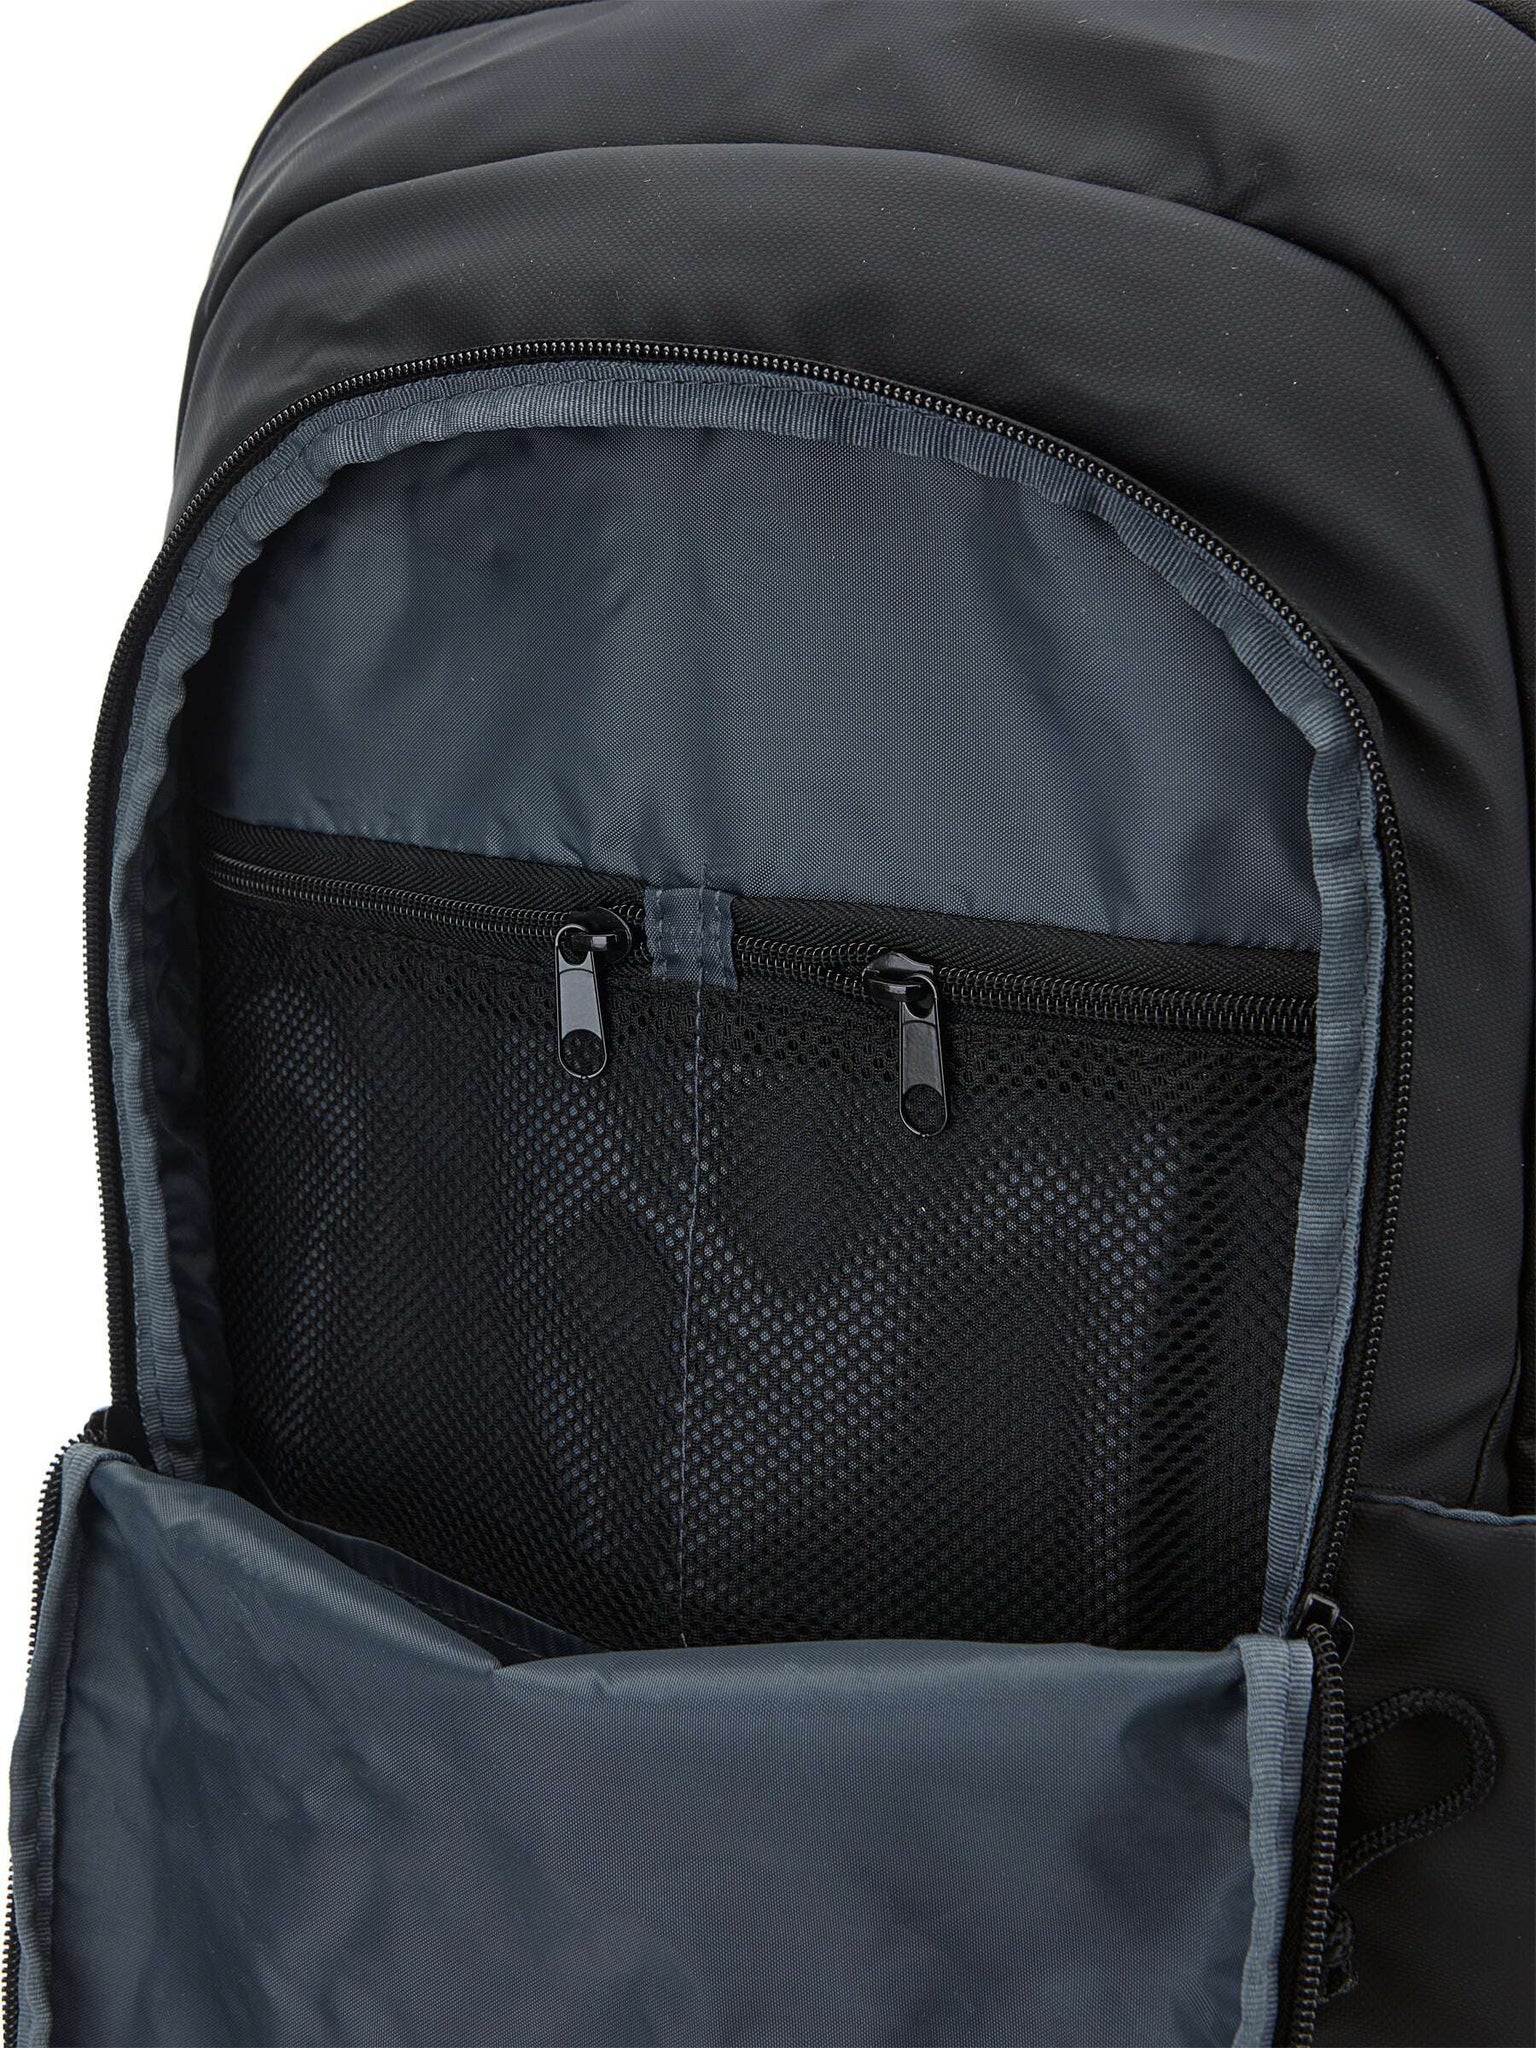 Head Pro X 30L Backpack